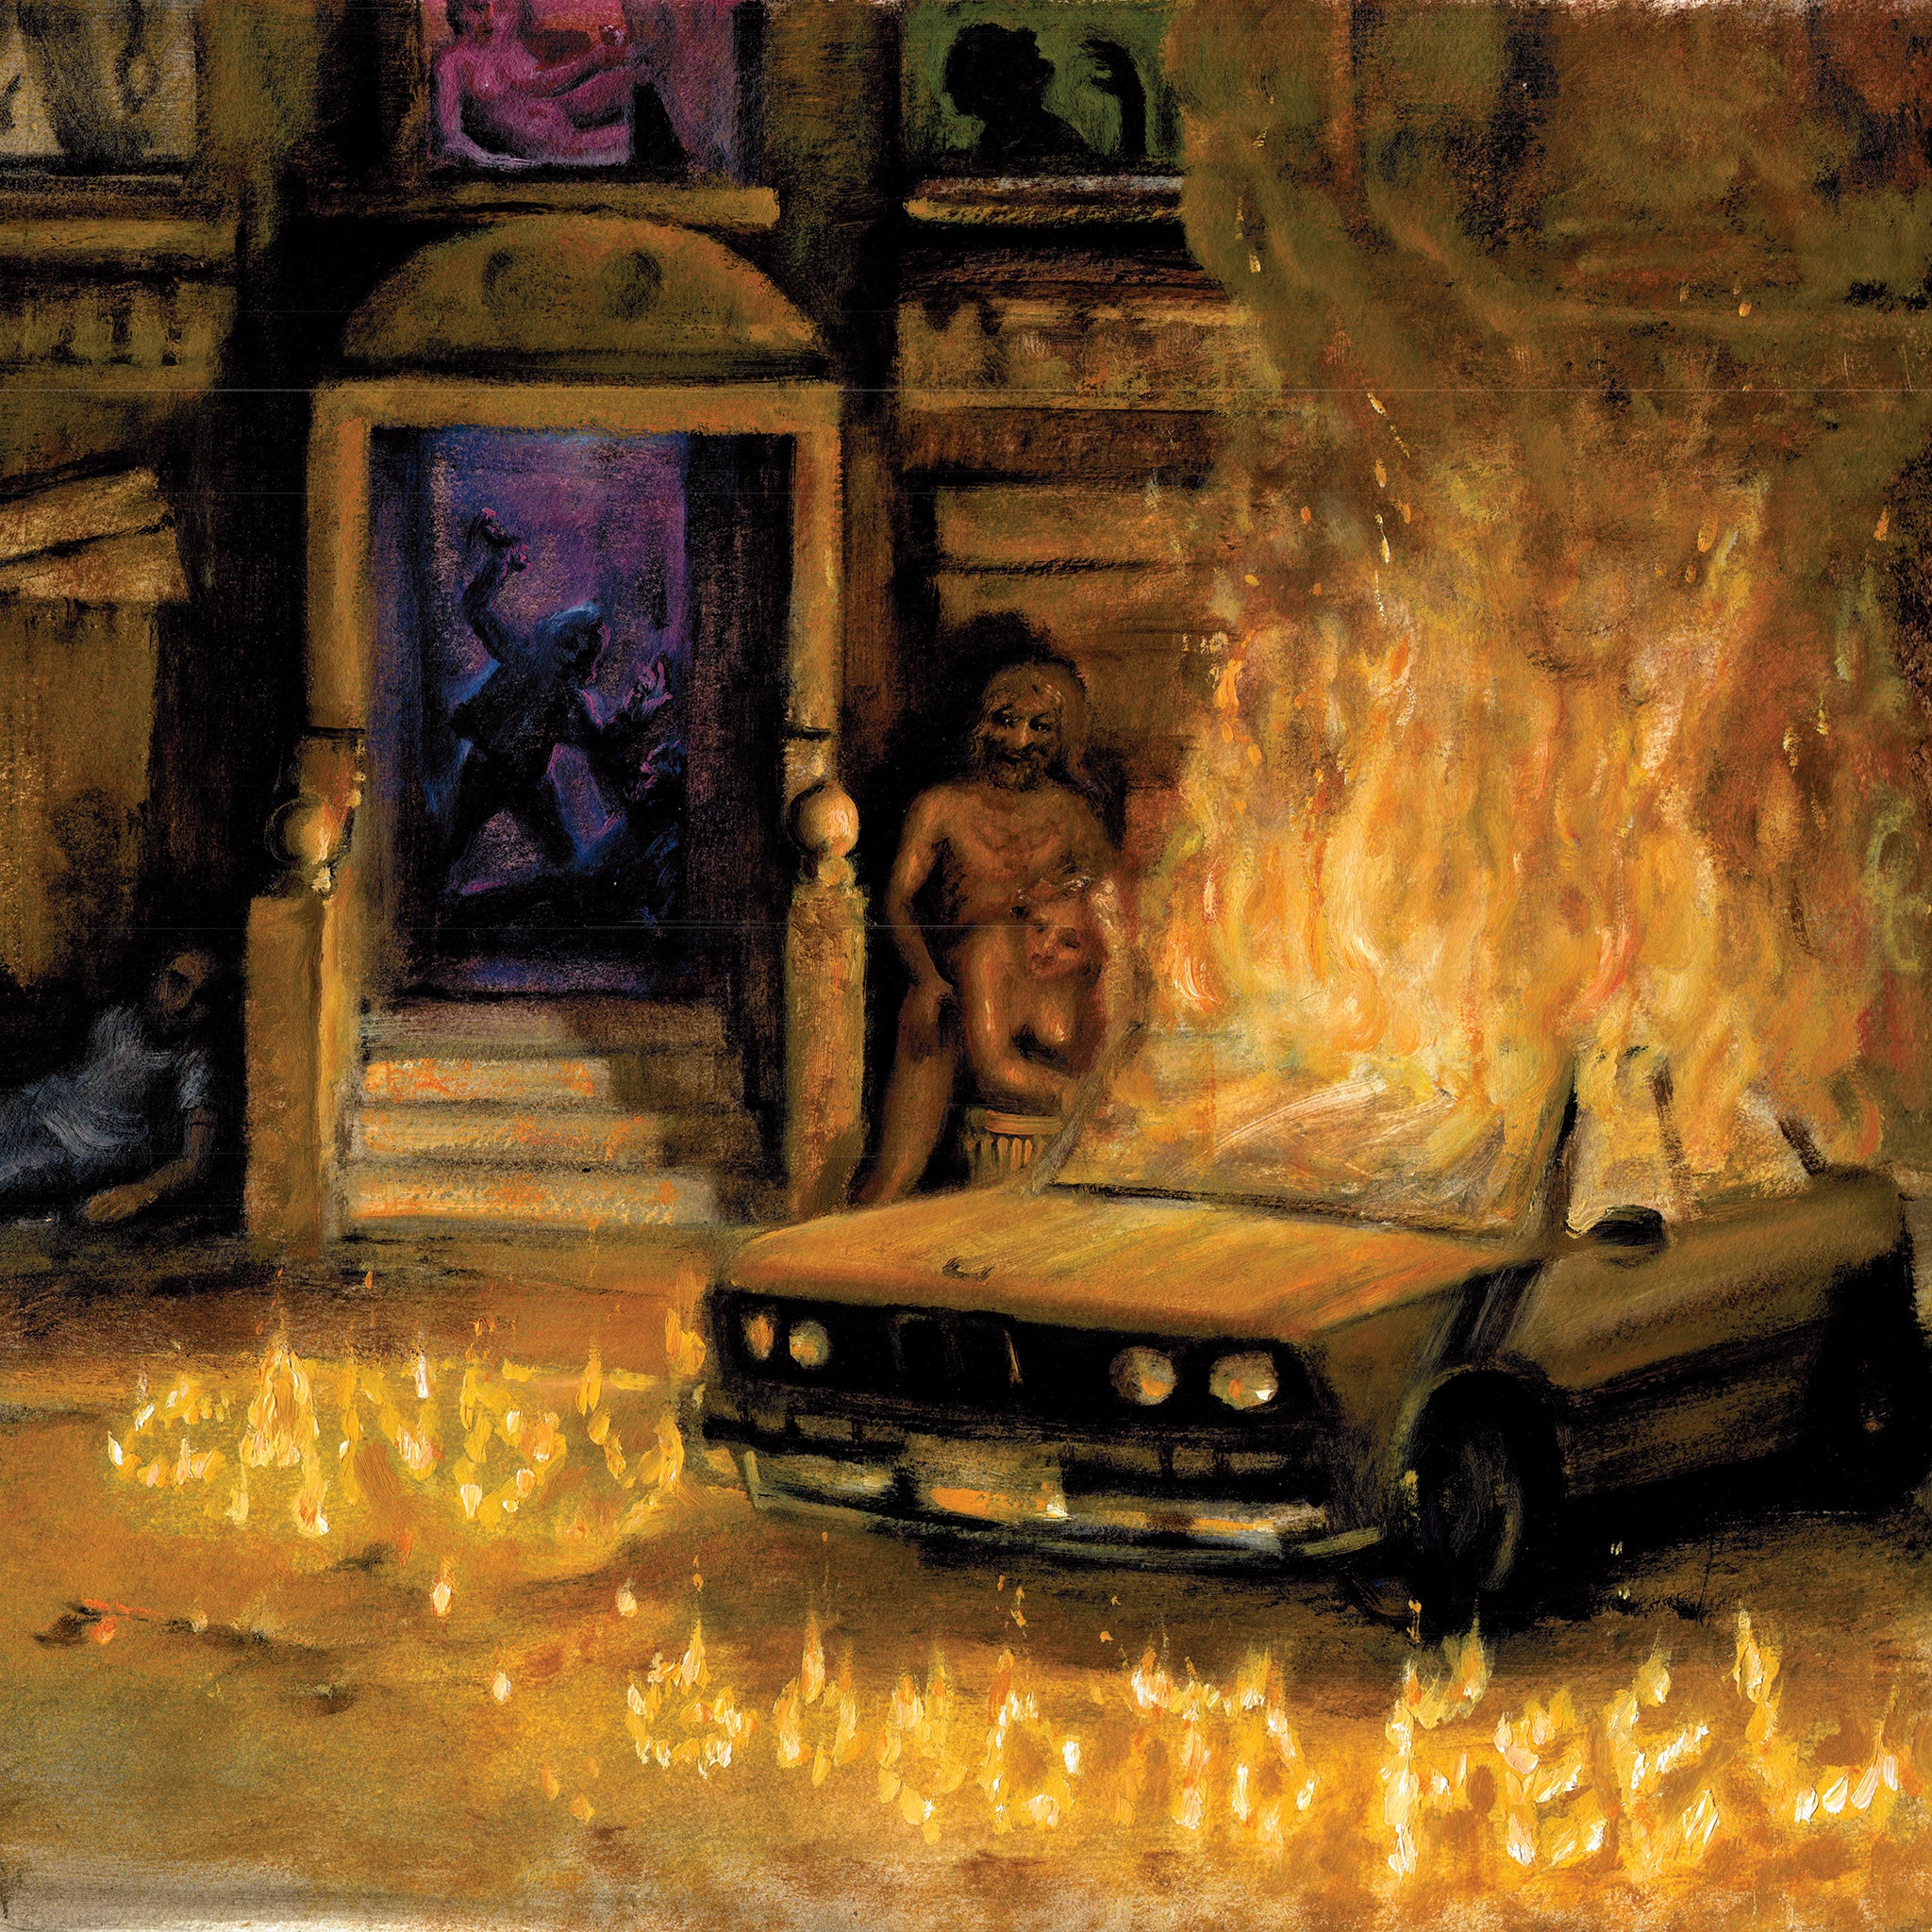 CANDY - GOOD TO FEEL Vinyl LP